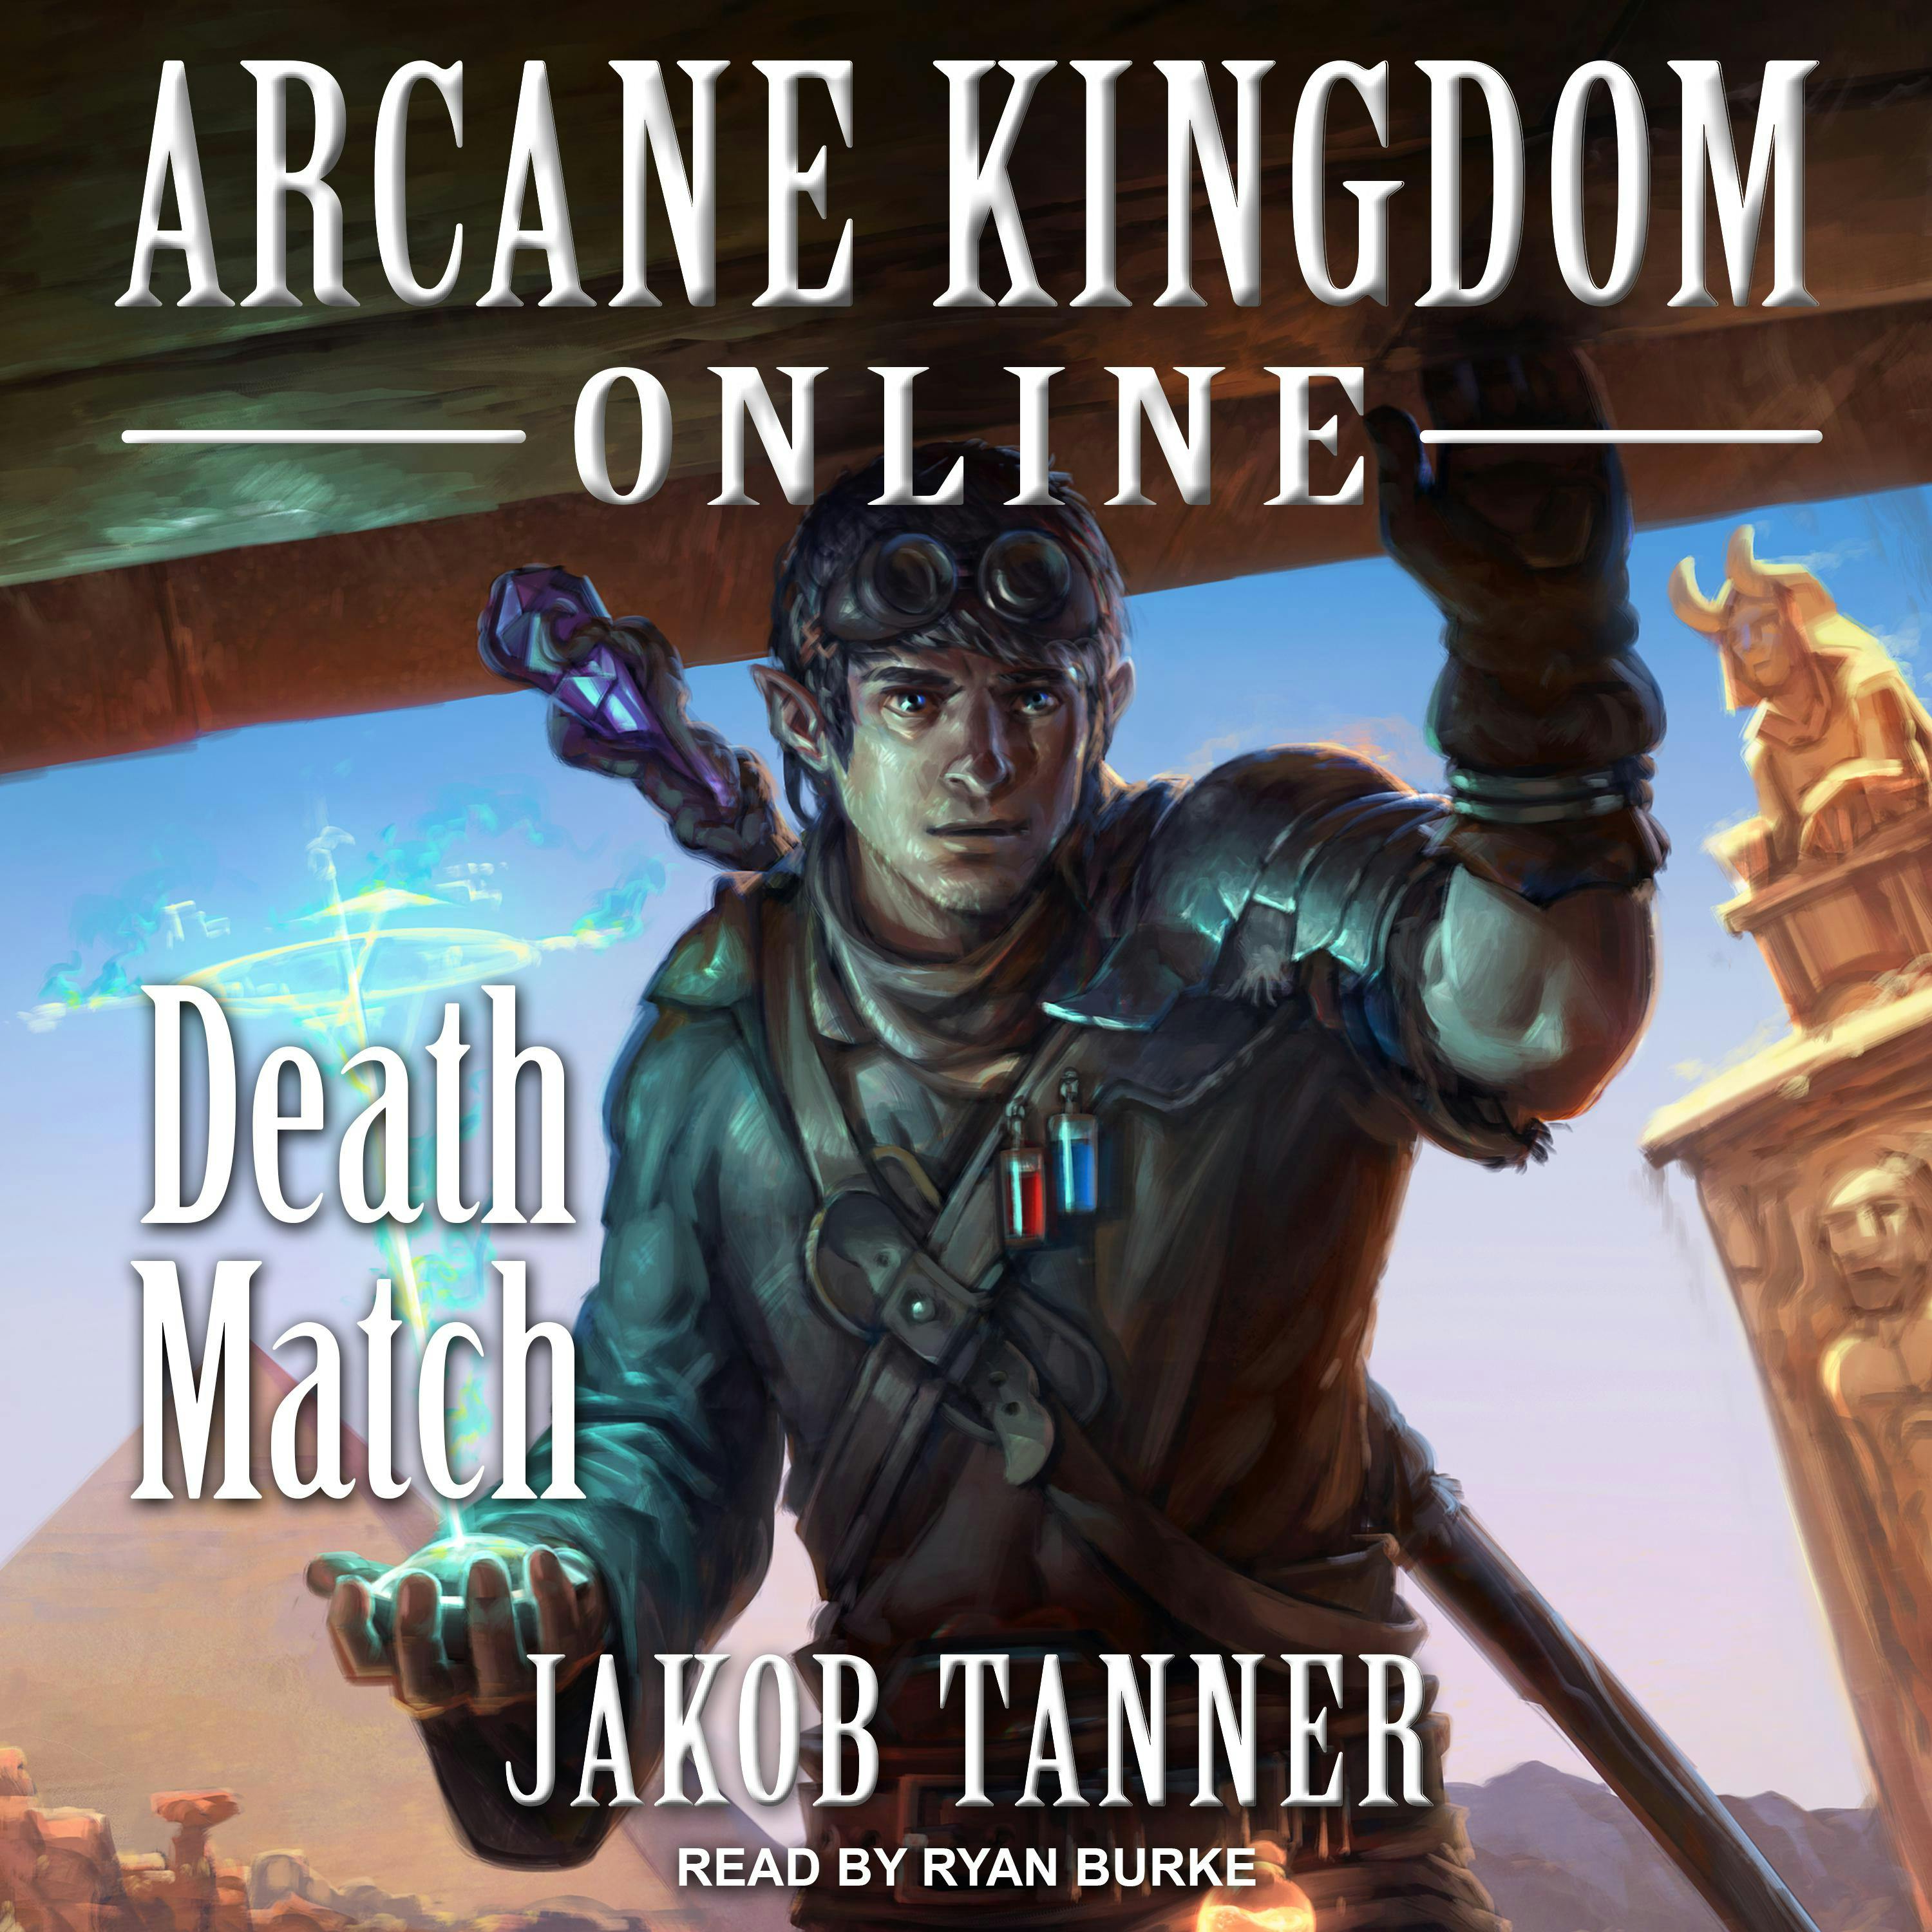 Arcane Kingdom Online: Death Match: Death Match - Jakob Tanner